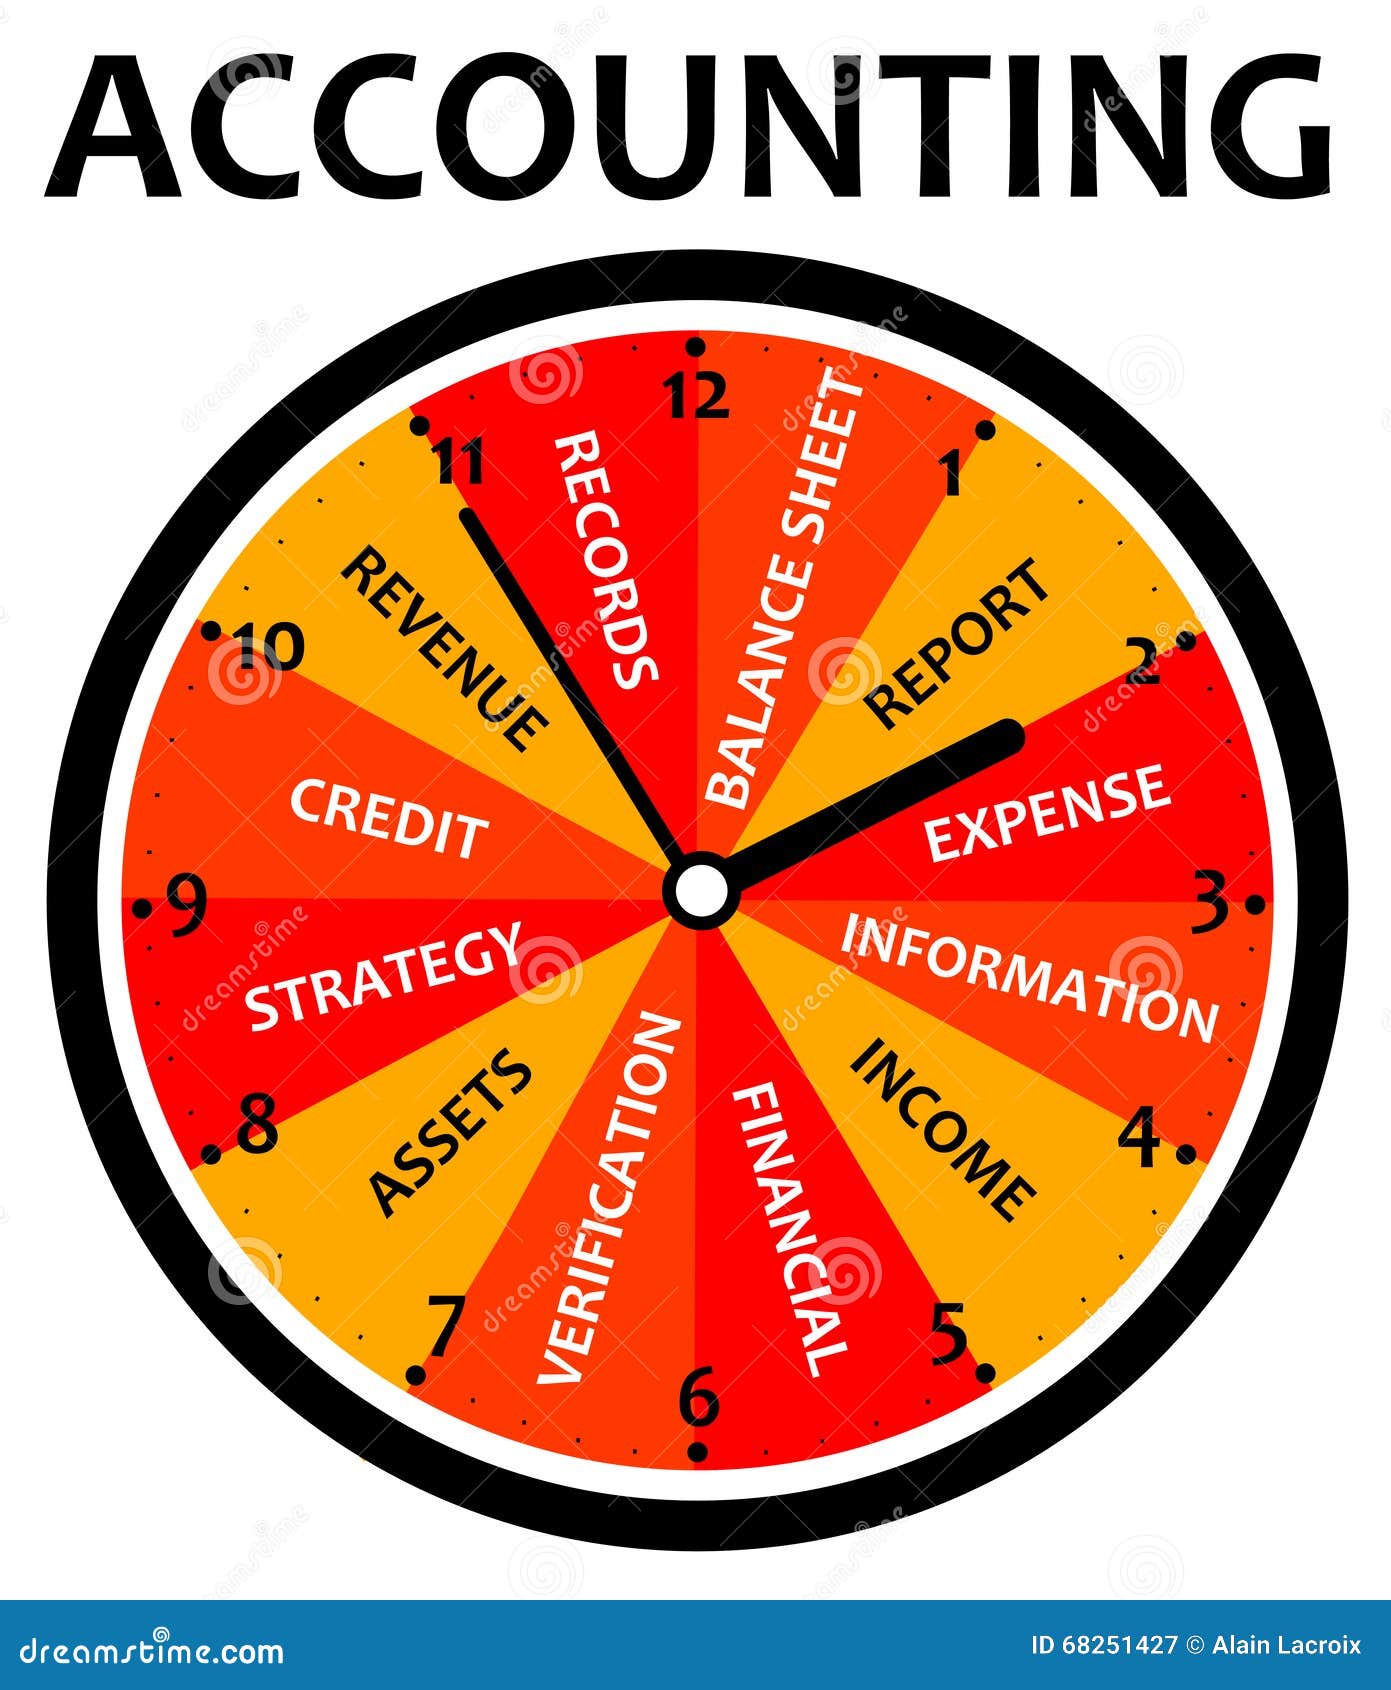 accounting topics